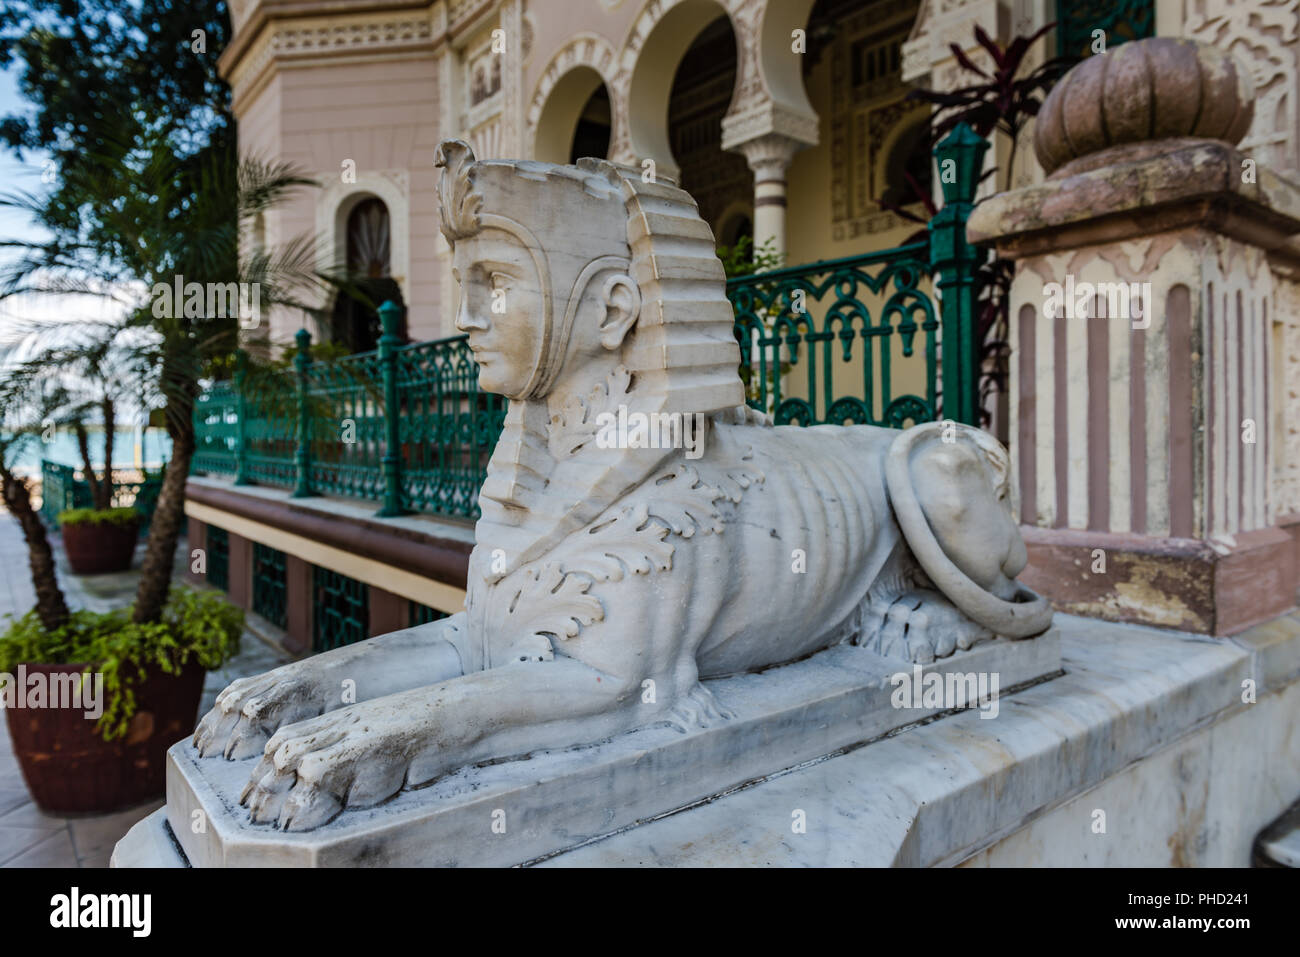 Cienfuegos, Cuba / March 15, 2016: Sphinx statue guards entrance to the Palacio de Valle, an ecclectic architectural building in a UNESCO World Herita Stock Photo